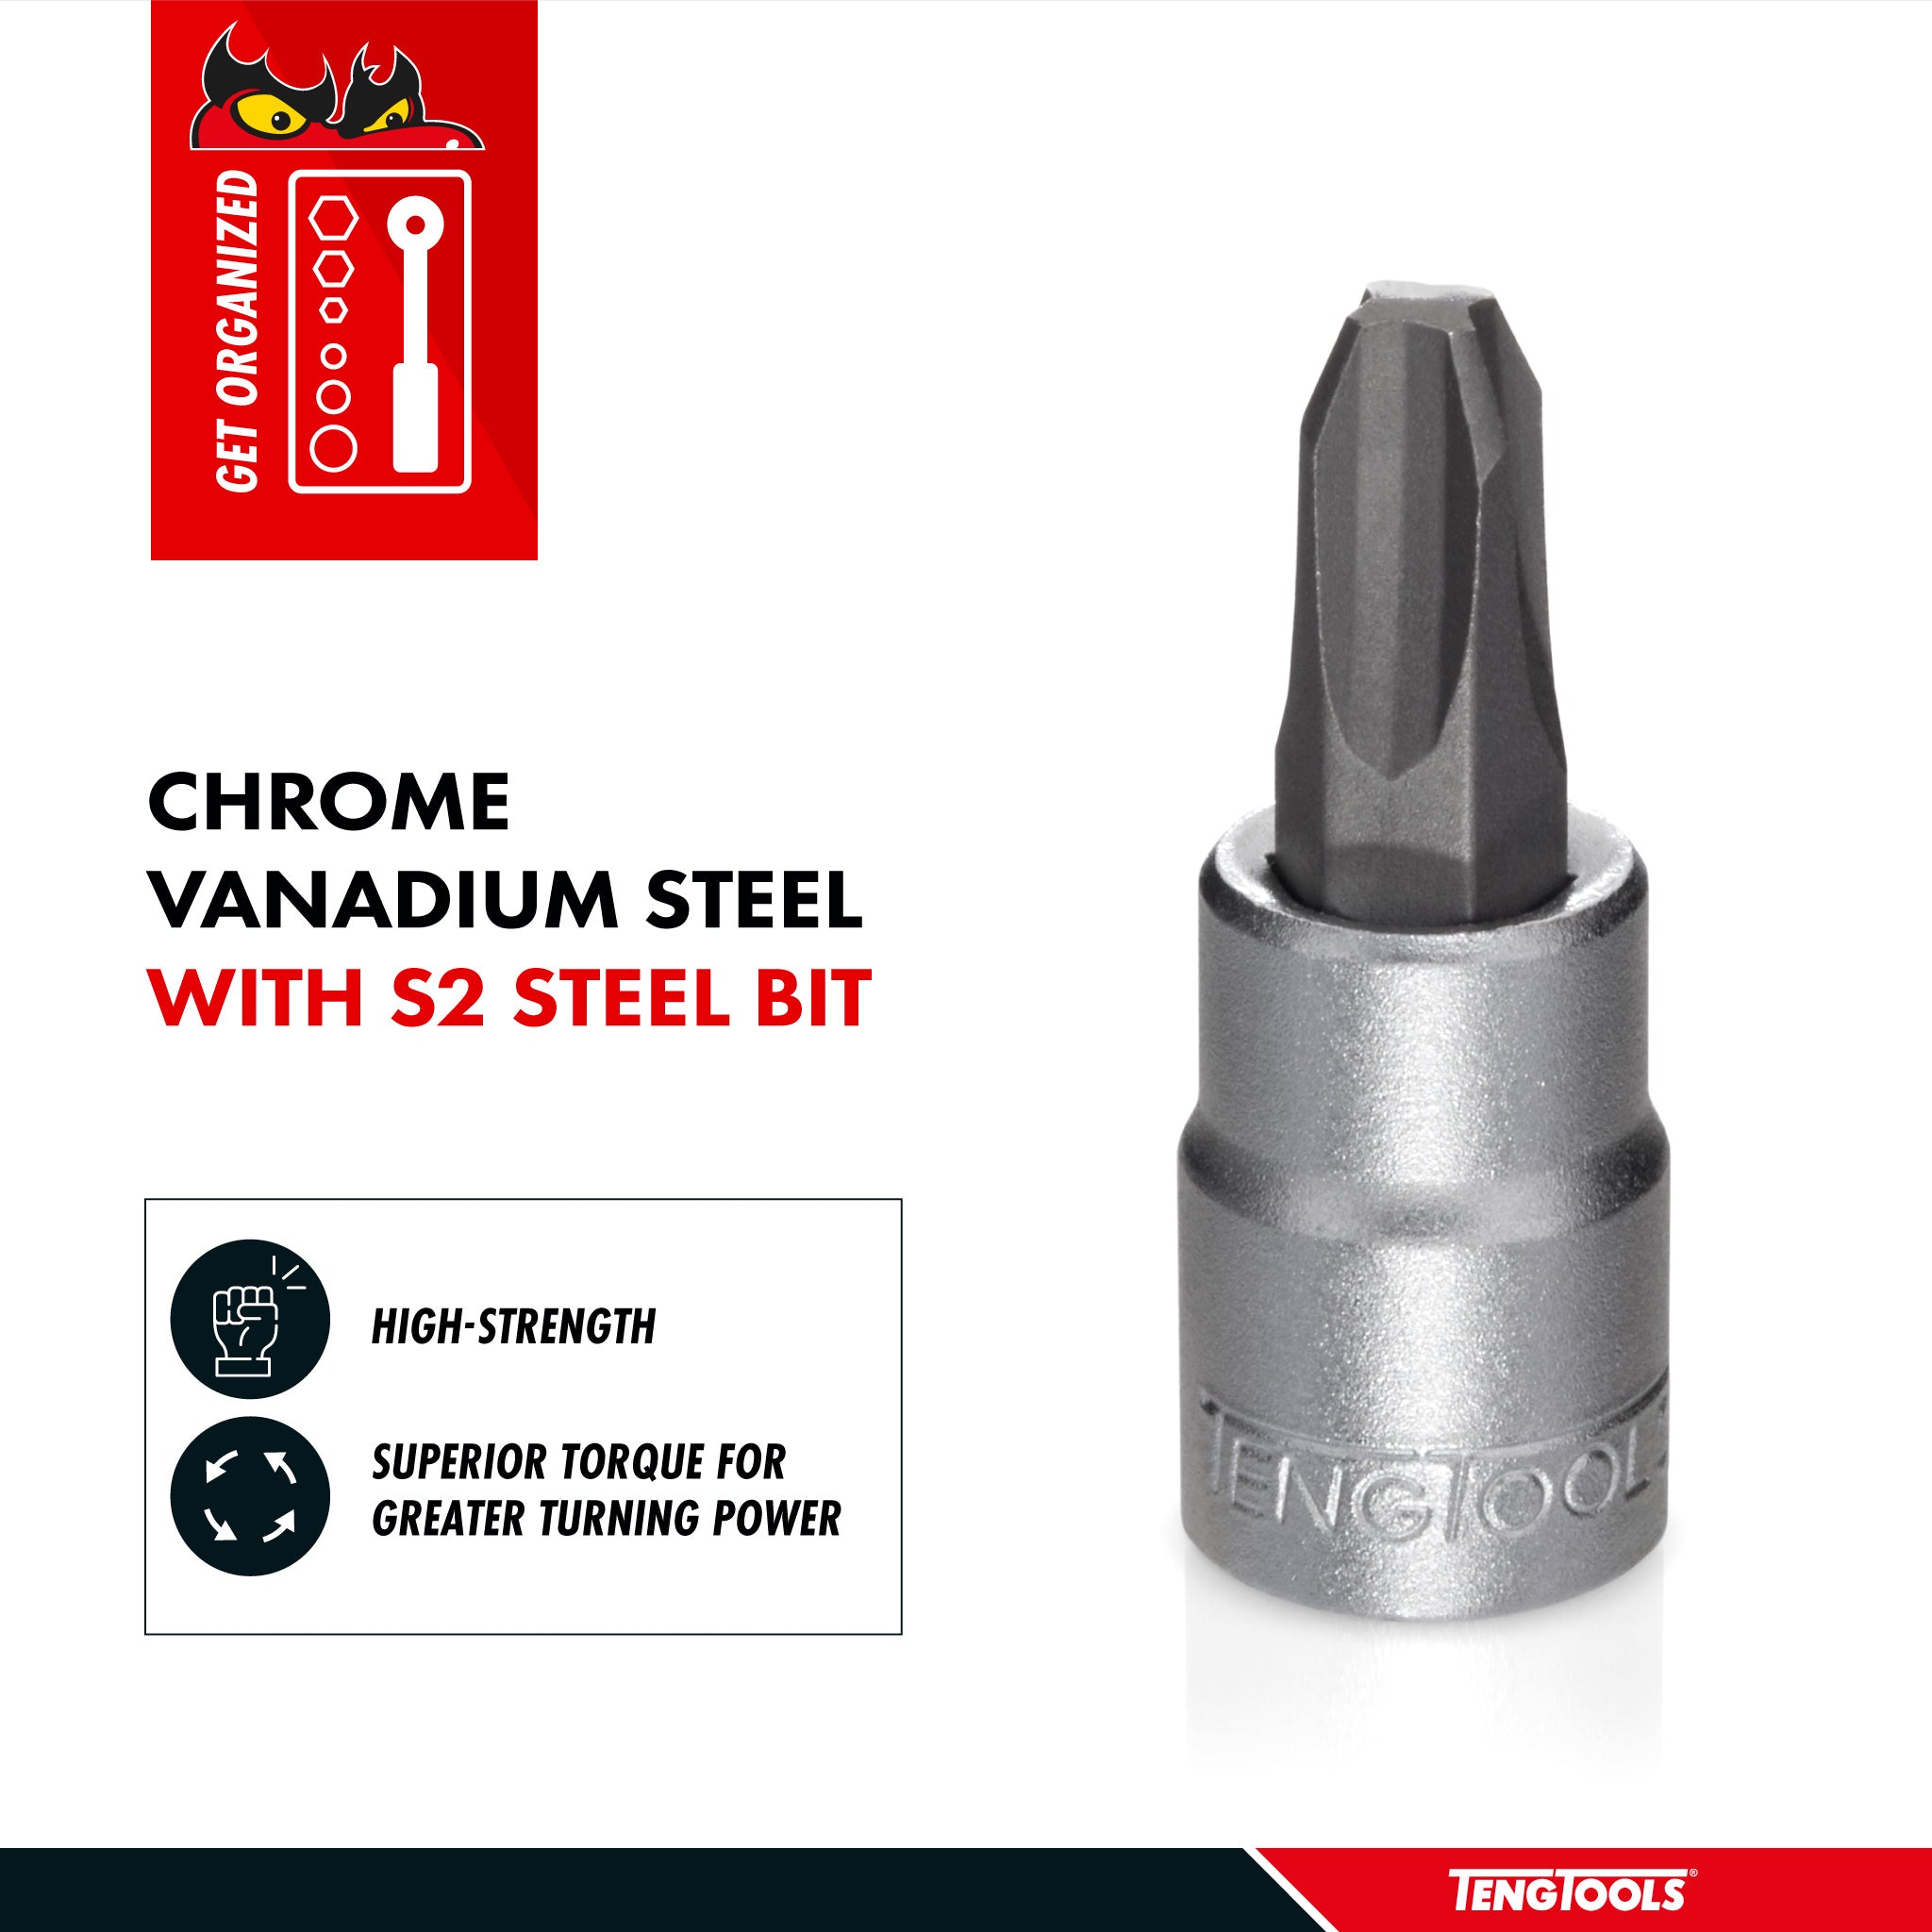 Teng Tools 1/4 Inch Drive Phillips PH Chrome Vanadium Sockets - PH2